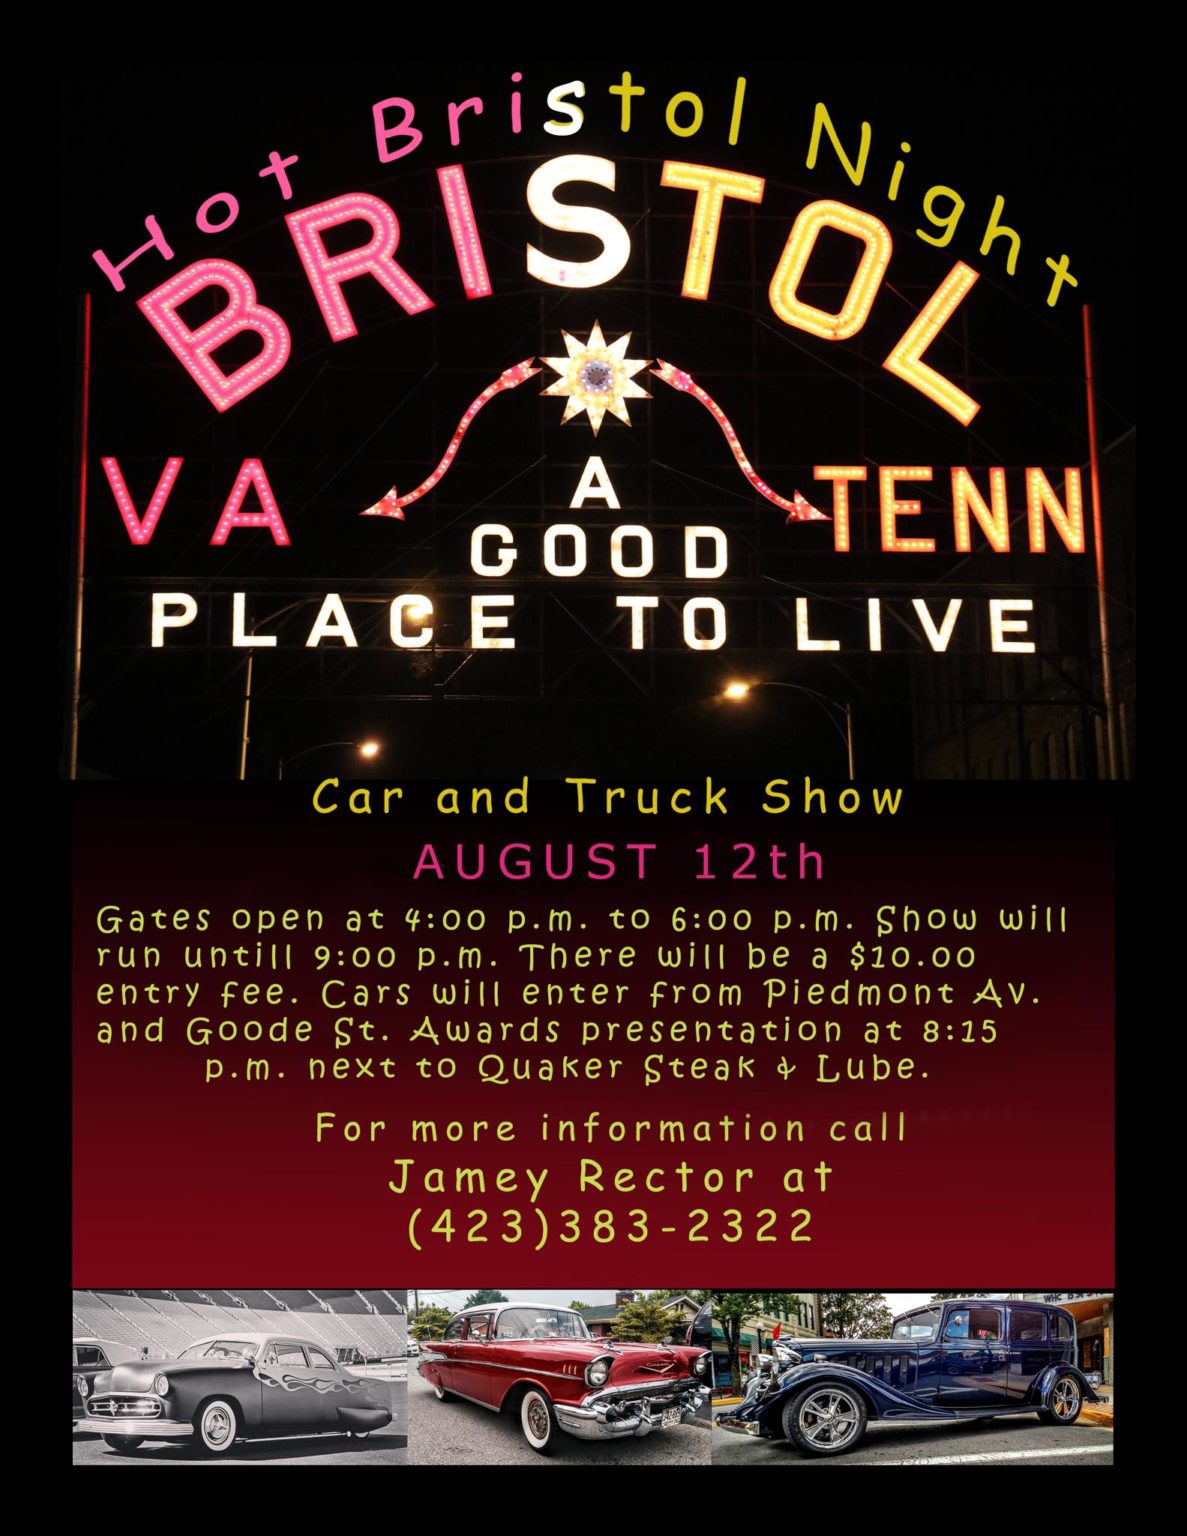 Hot Bristol Night Antique Car Show Discover Bristol